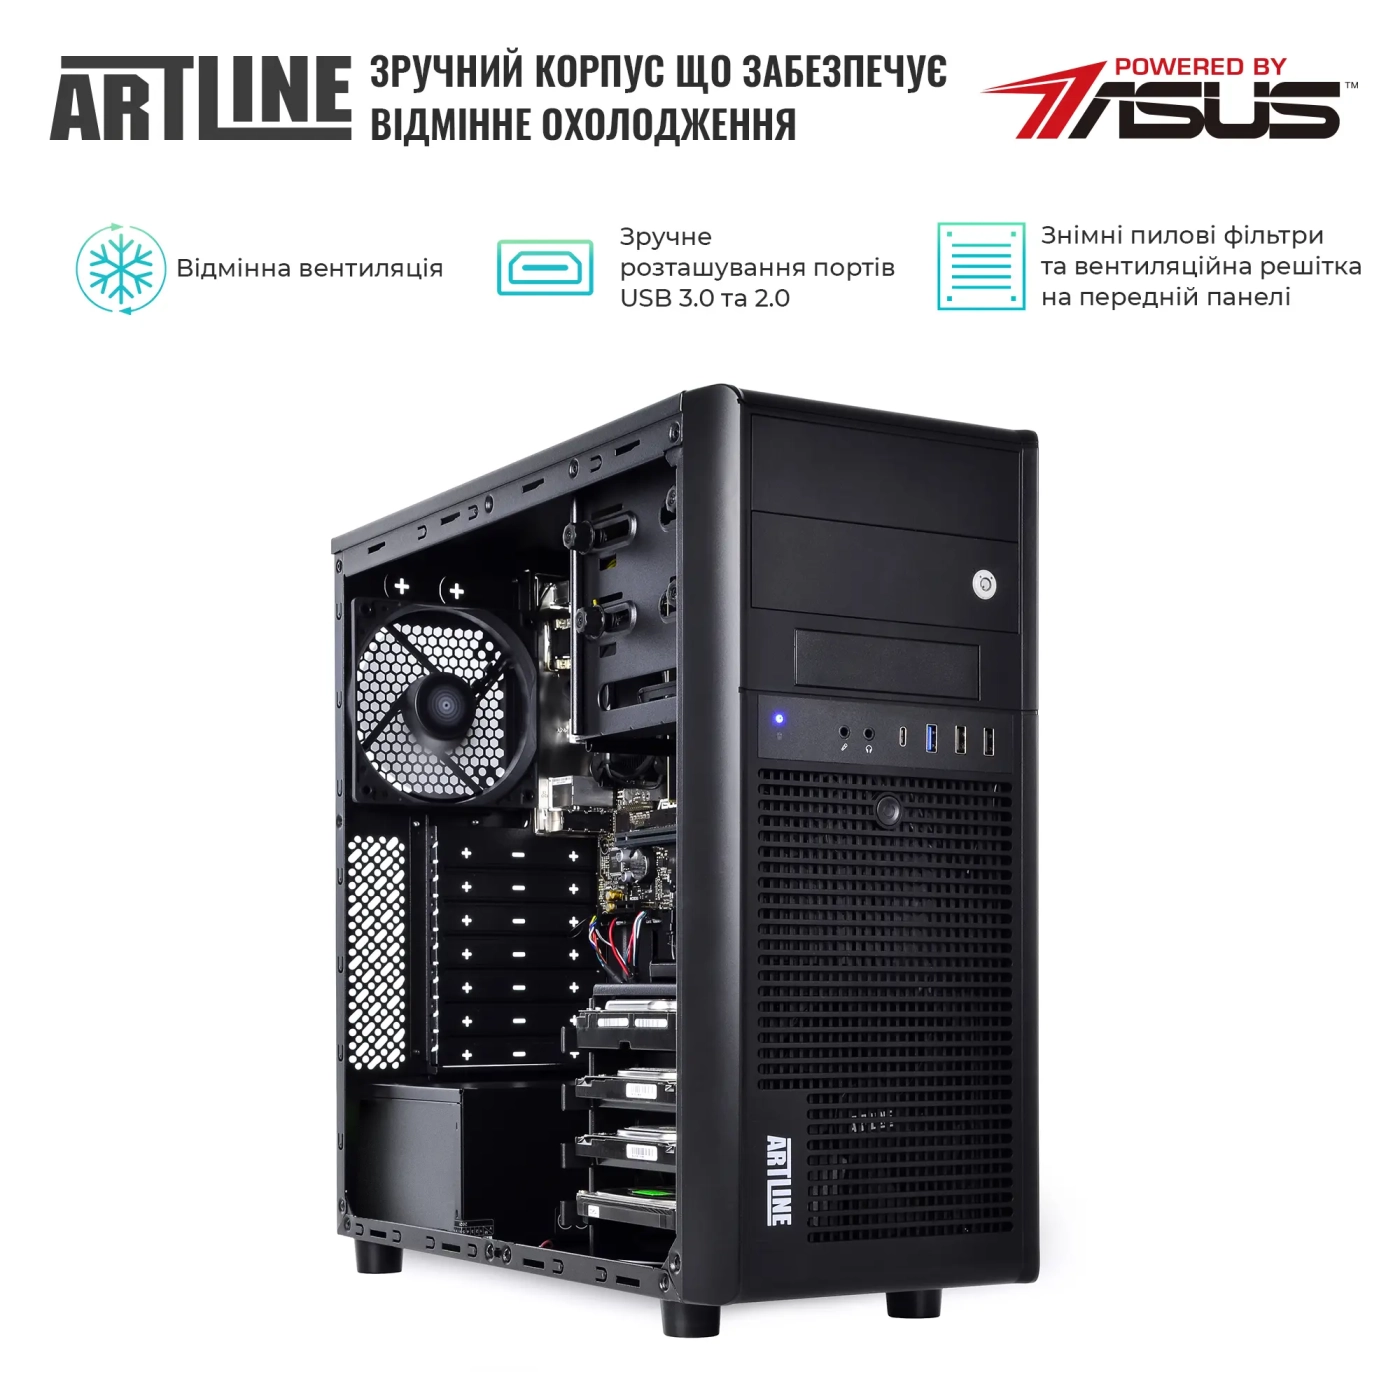 Купити Сервер ARTLINE Business T37v15 - фото 3